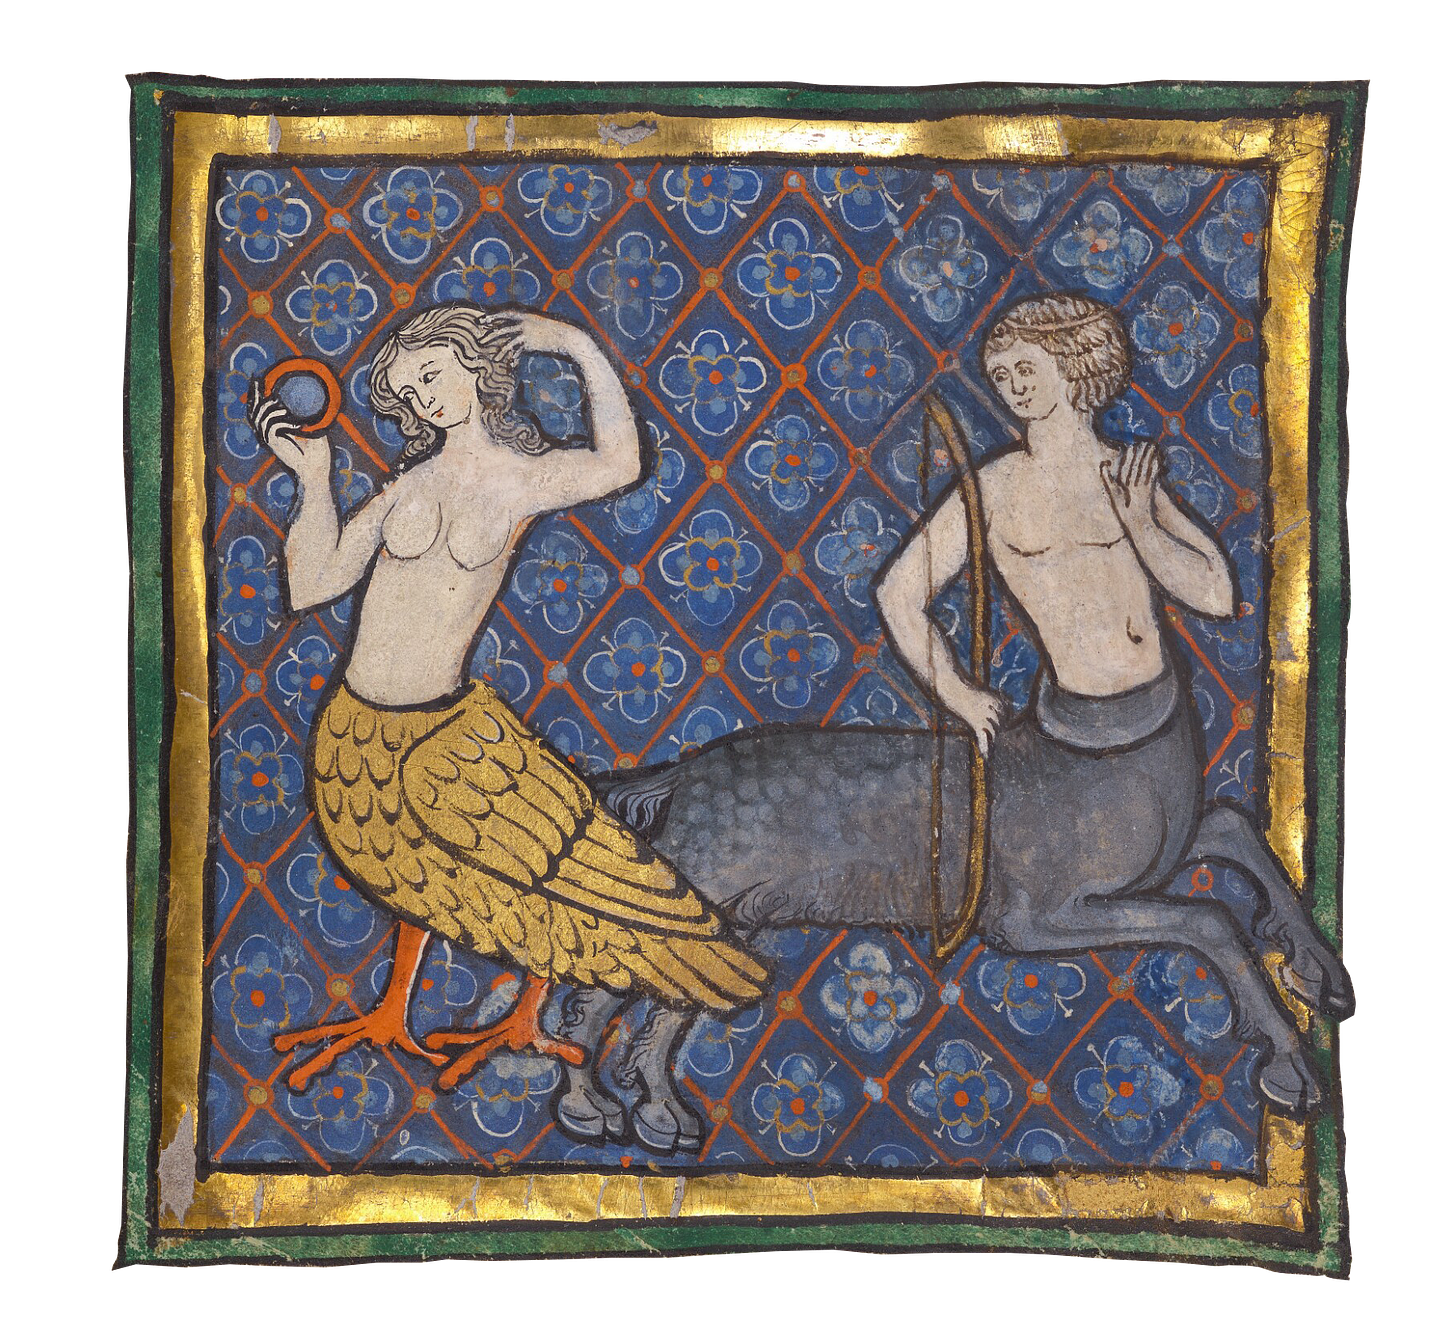 An illuminated manuscript showing a Siren and a Centaur.